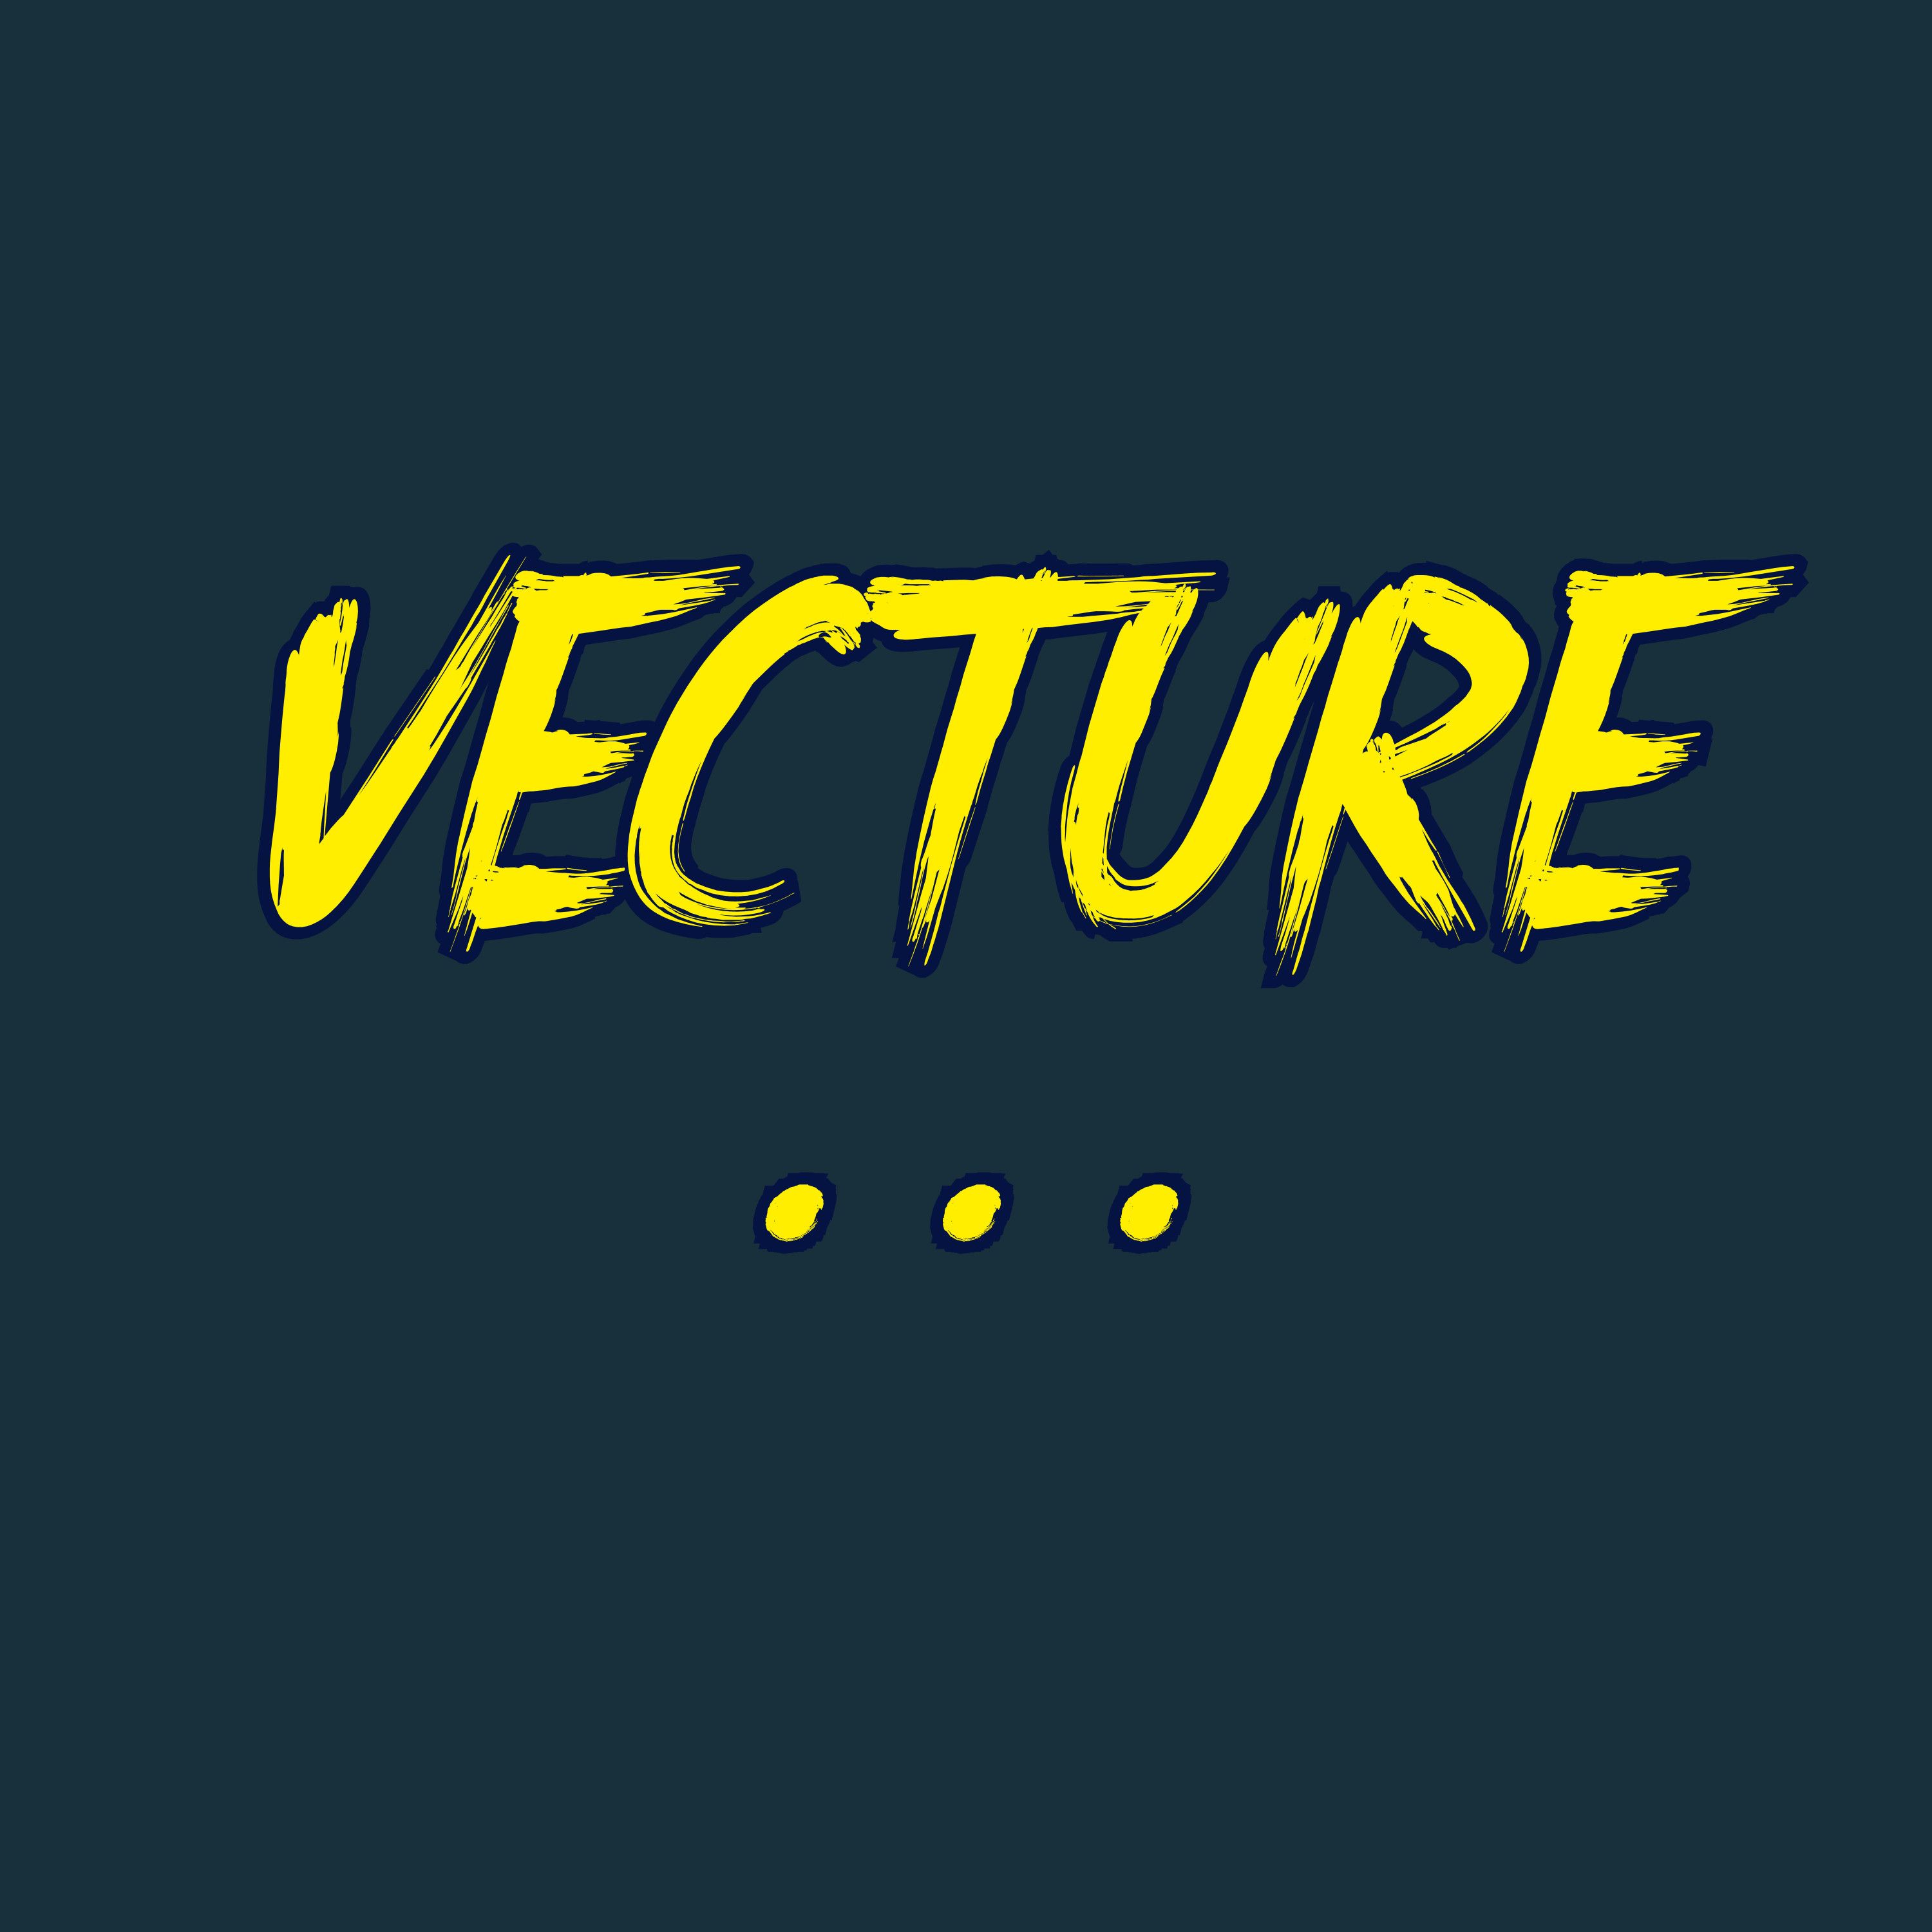 Vecture